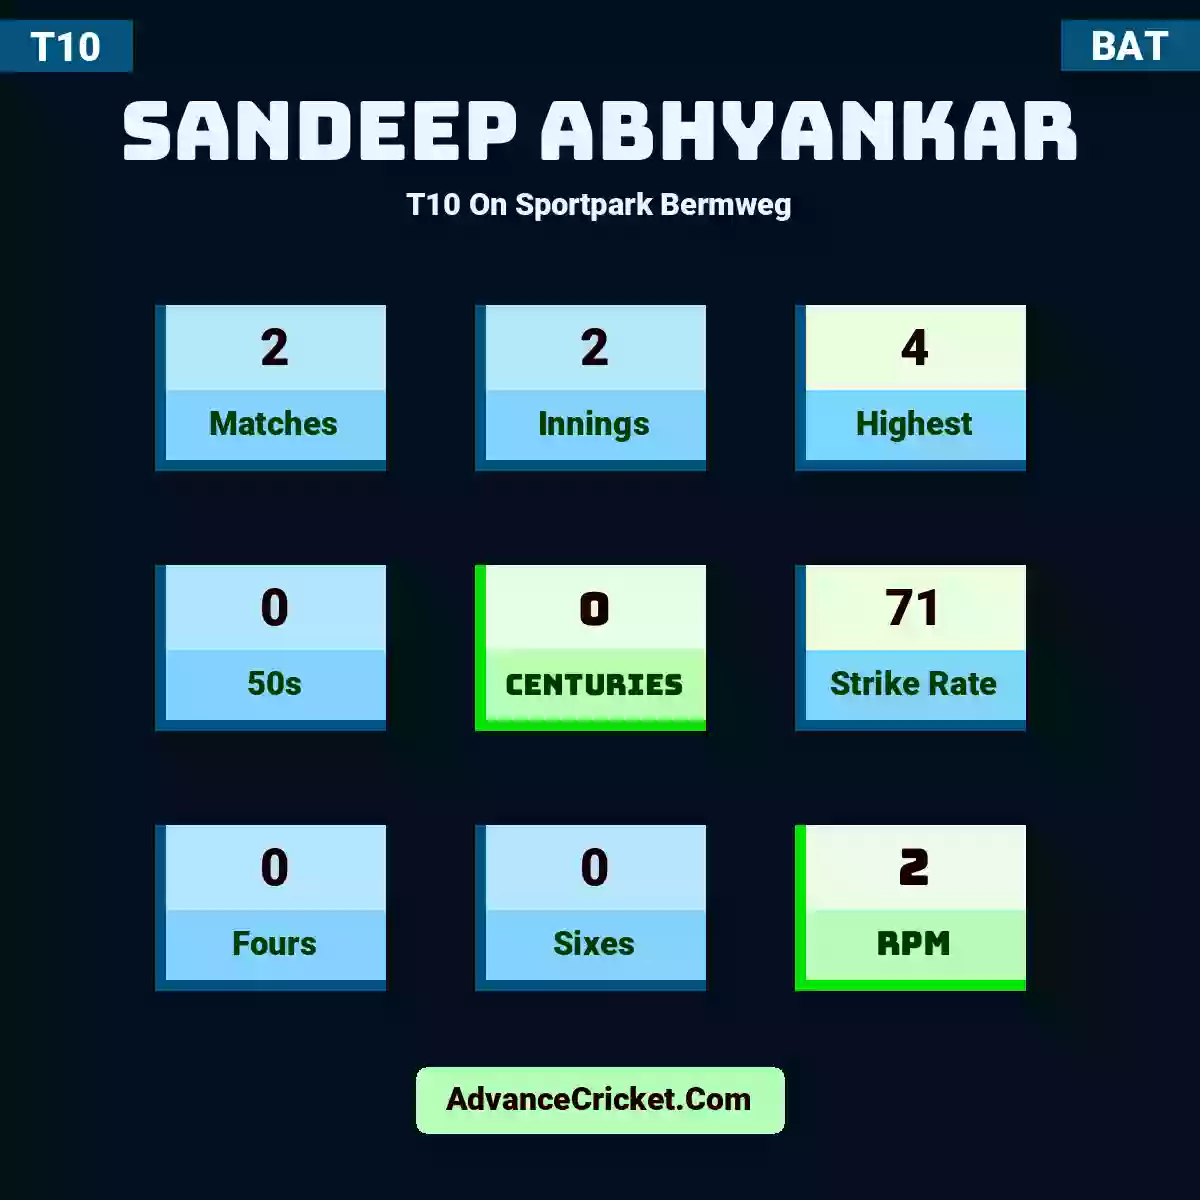 Sandeep Abhyankar T10  On Sportpark Bermweg, Sandeep Abhyankar played 2 matches, scored 4 runs as highest, 0 half-centuries, and 0 centuries, with a strike rate of 71. S.Abhyankar hit 0 fours and 0 sixes, with an RPM of 2.